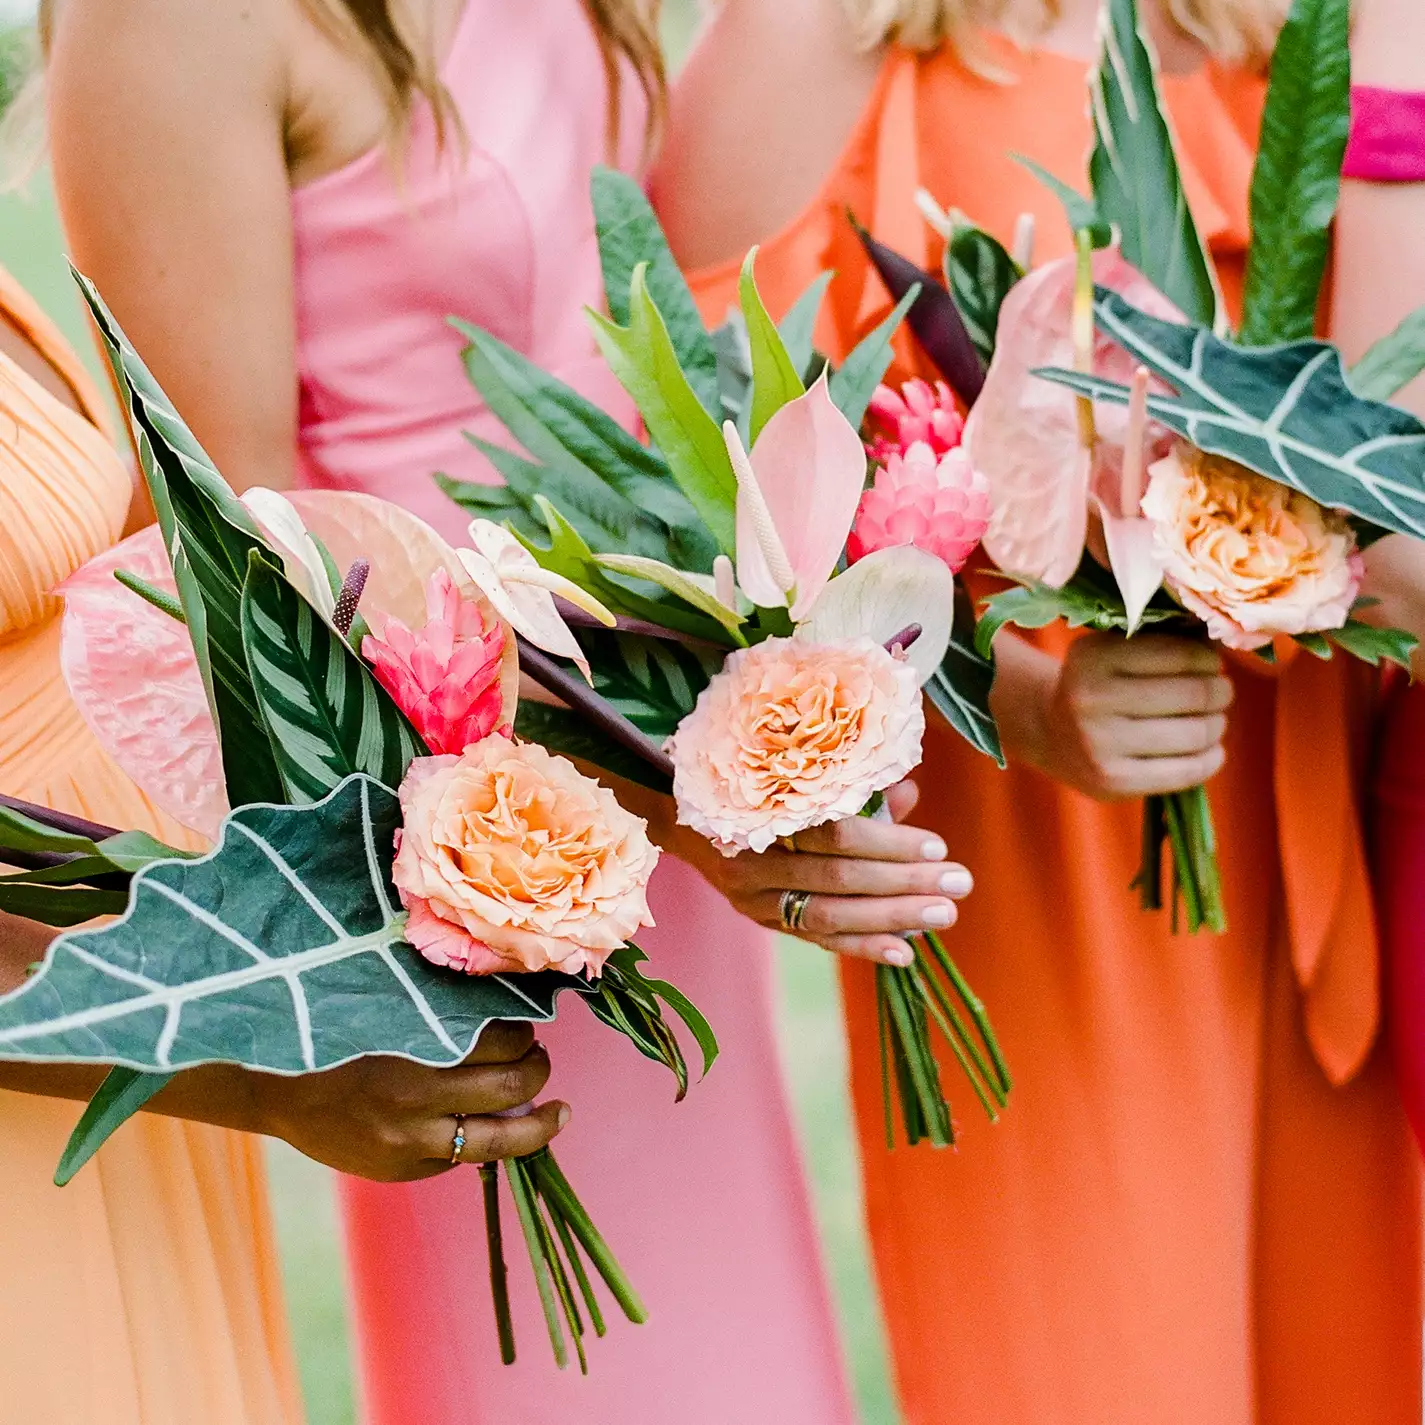 18 Striking Tropical Wedding Bouquets